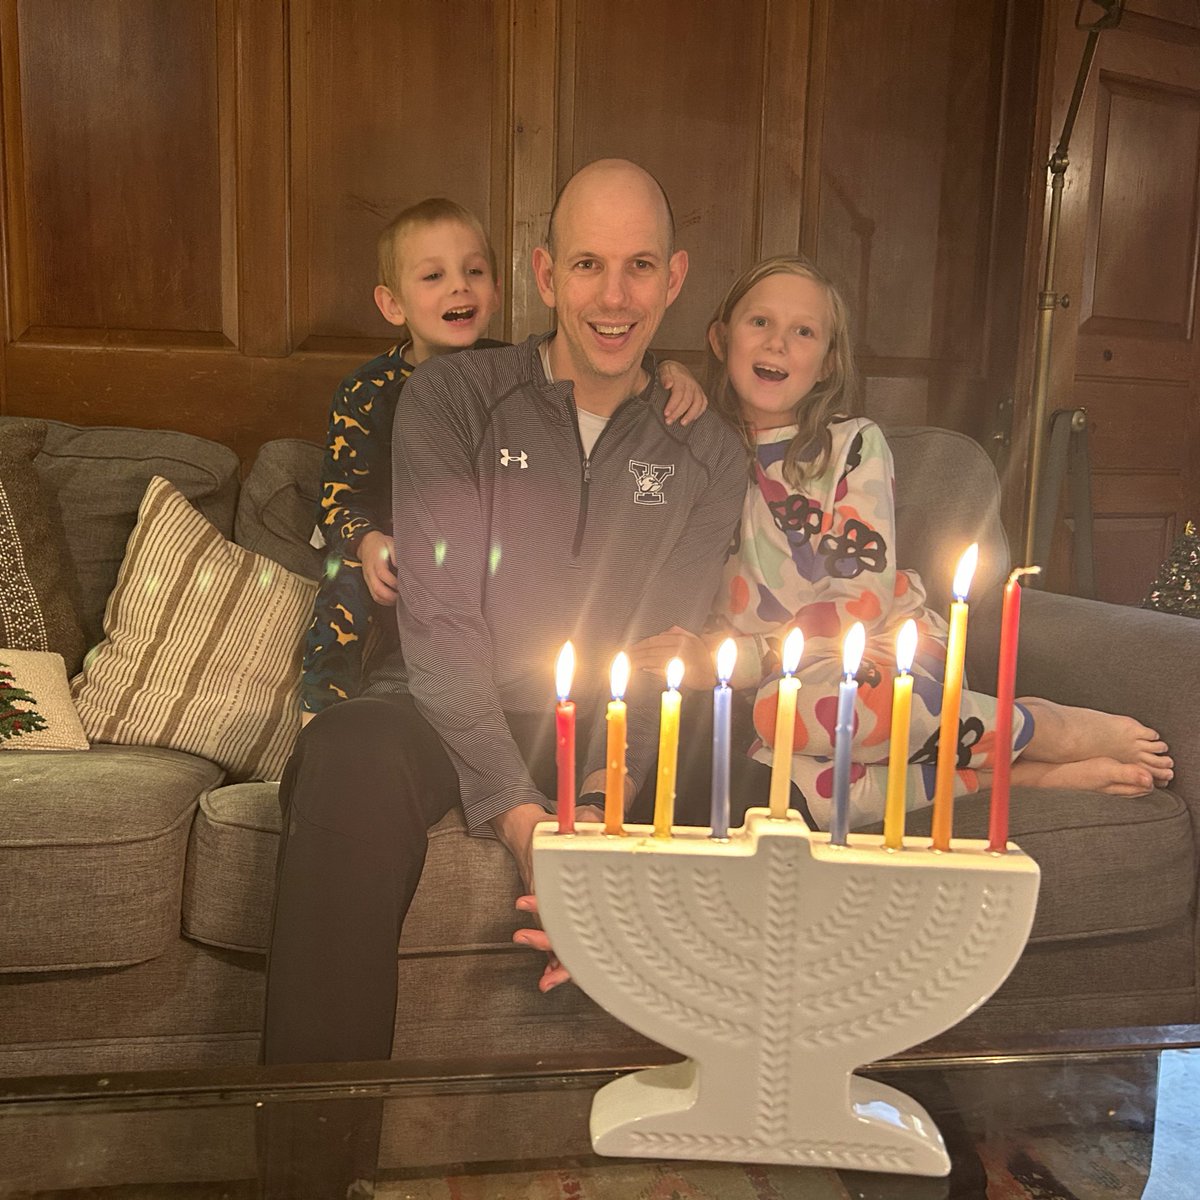 Yale Men’s 🏀 associate head coach Justin Simon celebrating the 7th night of Hanukkah. 🕎 @YaleCoachSimon 

#JCA | #CoachesLightCandles | #HappyHanukkah